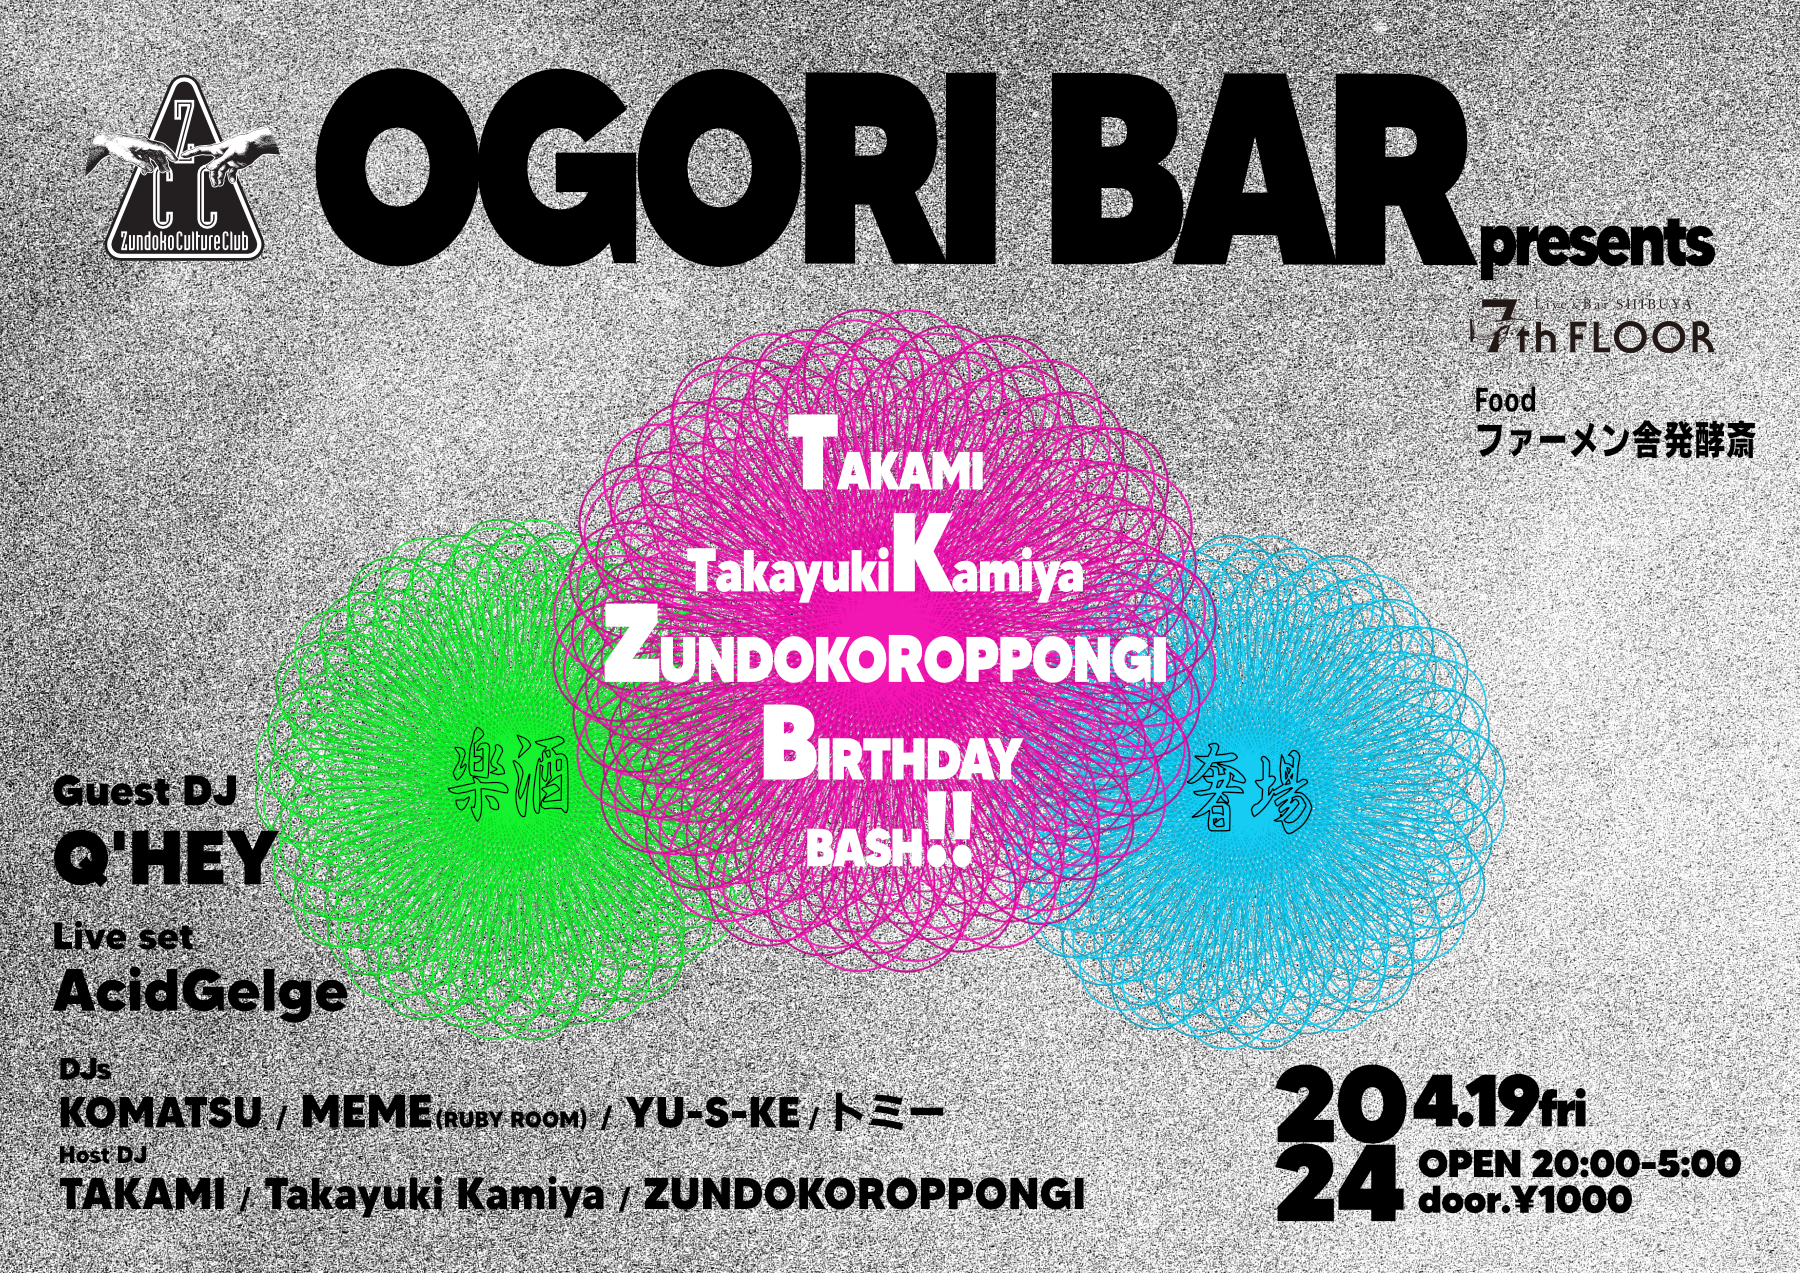 “ogori bar presents TAKAMI&Takayuki Kamiya&ZUNDOKOROPPONGI BIRTHDAY BASH!!